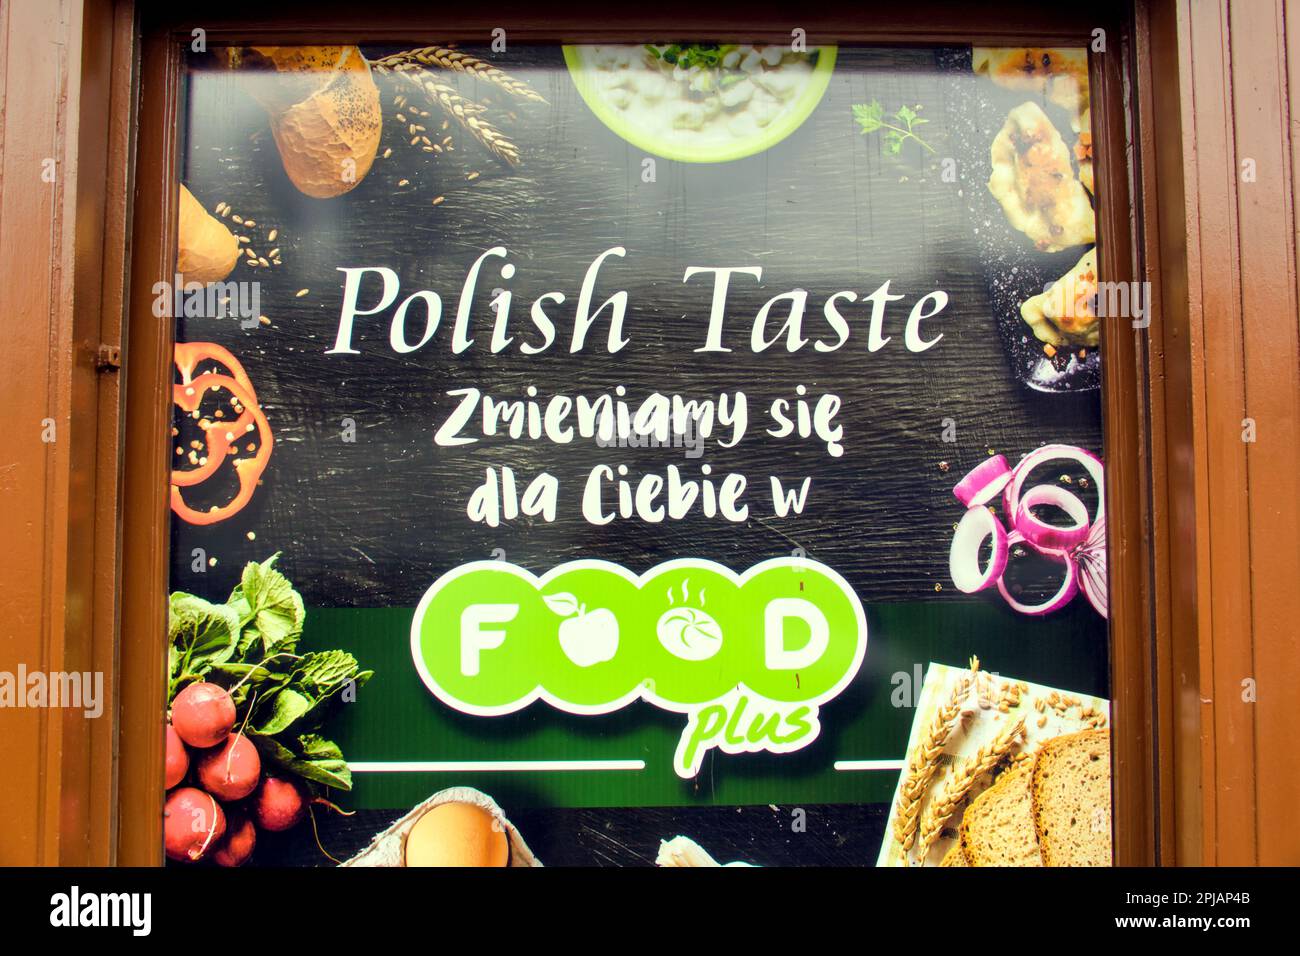 poland Taste Mini market food store Poland Taste 21 Hyndland St Glasgow, Écosse, Royaume-Uni Banque D'Images